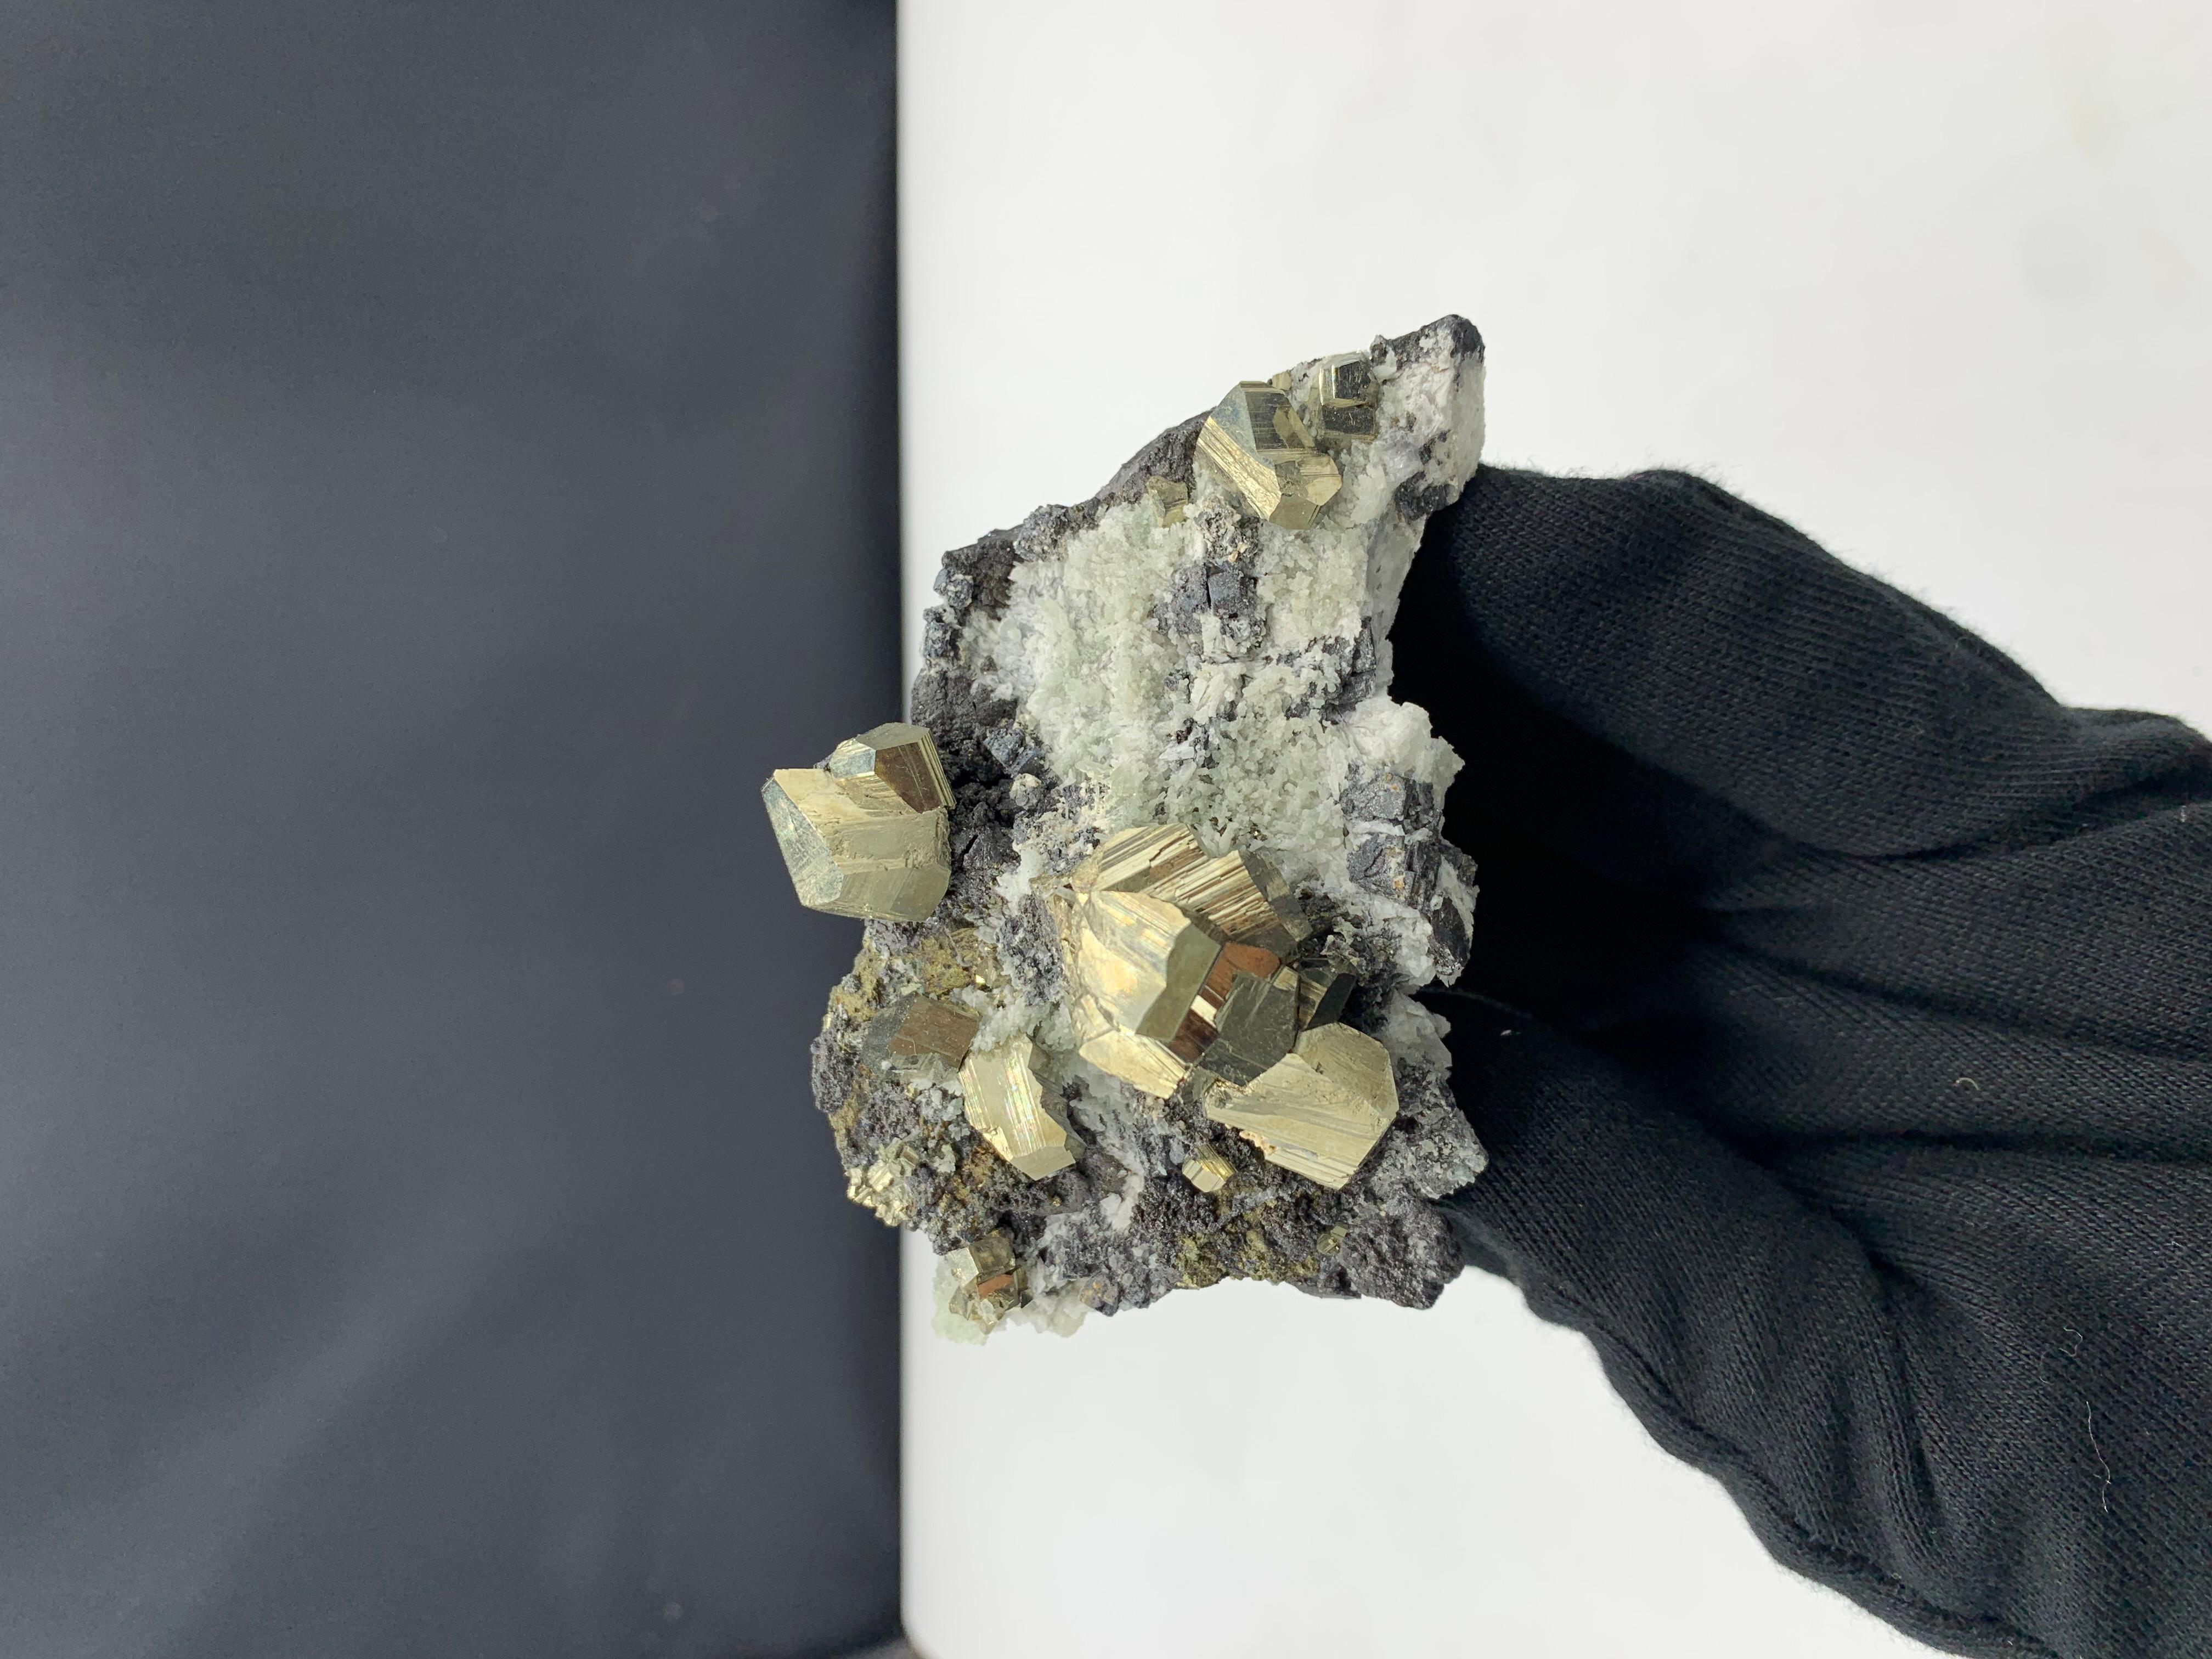 where is pyrite found